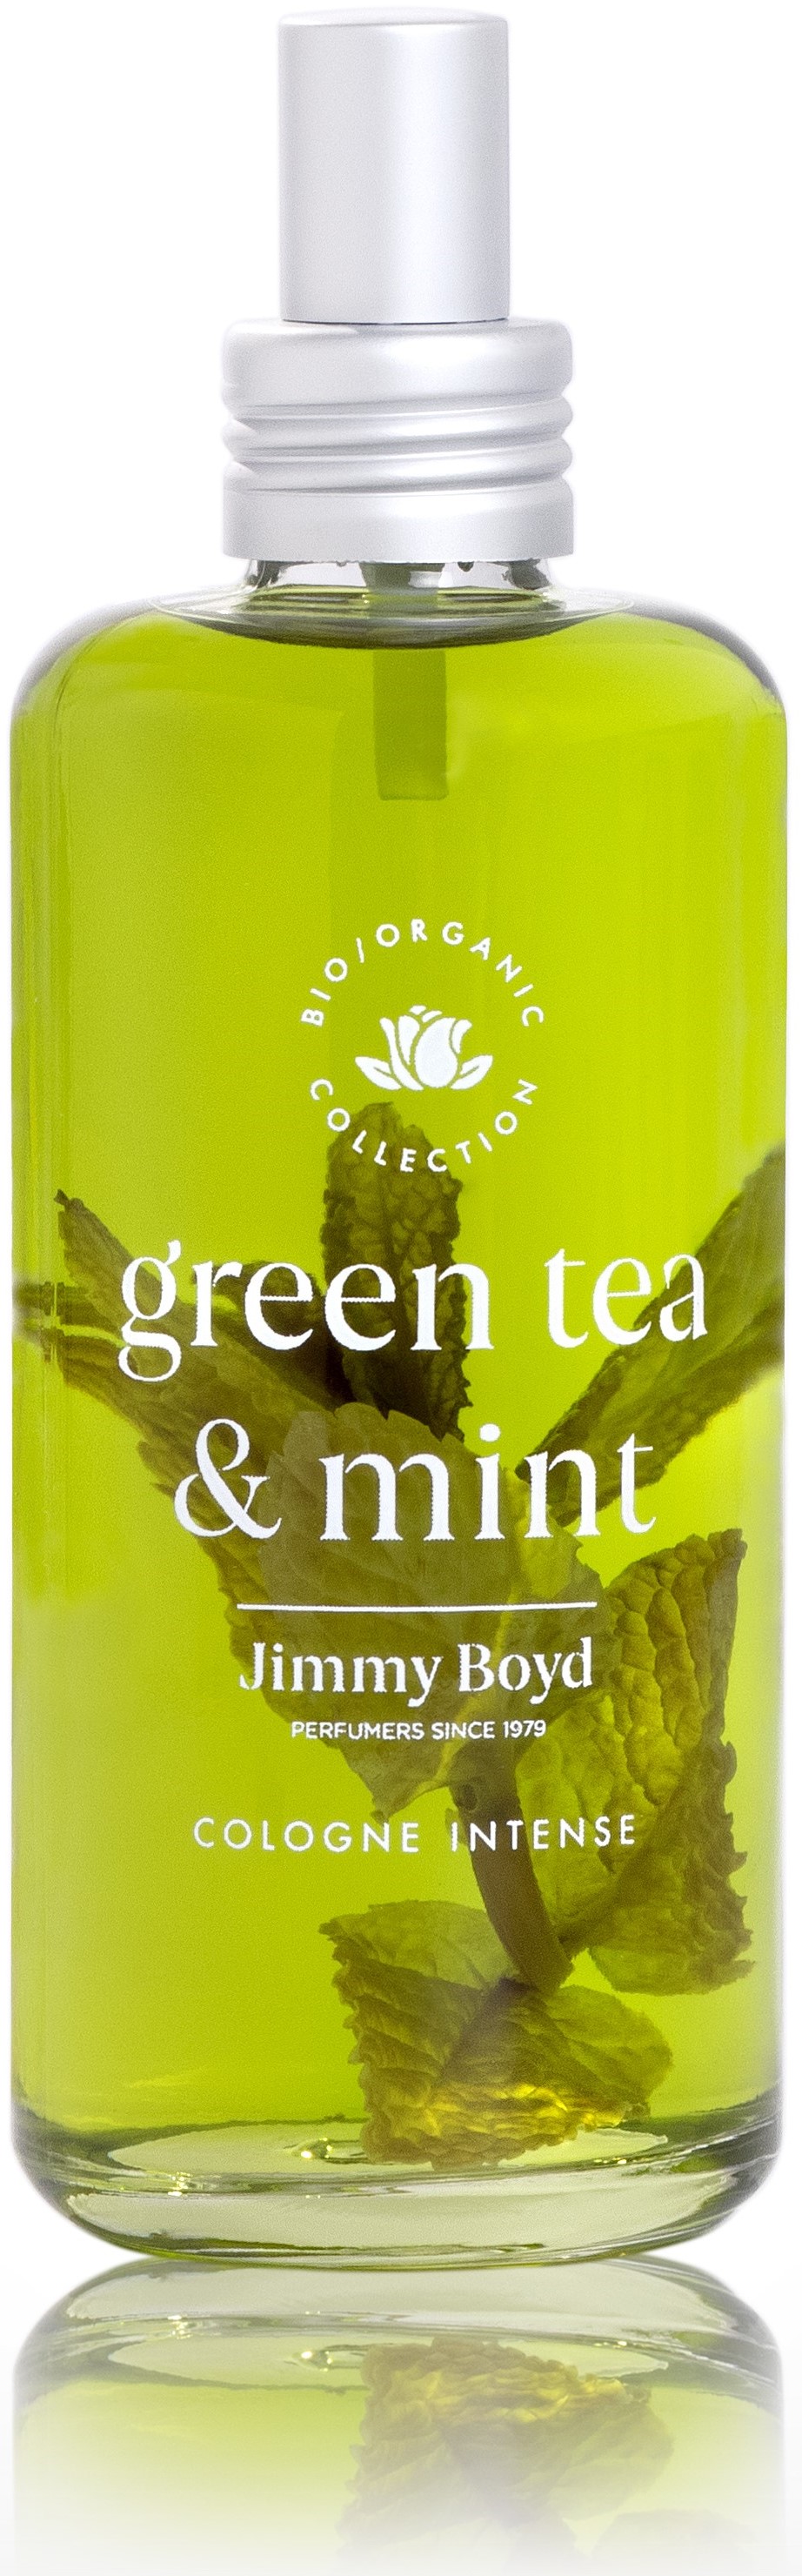 jimmy boyd green tea & mint woda kolońska 200 ml   